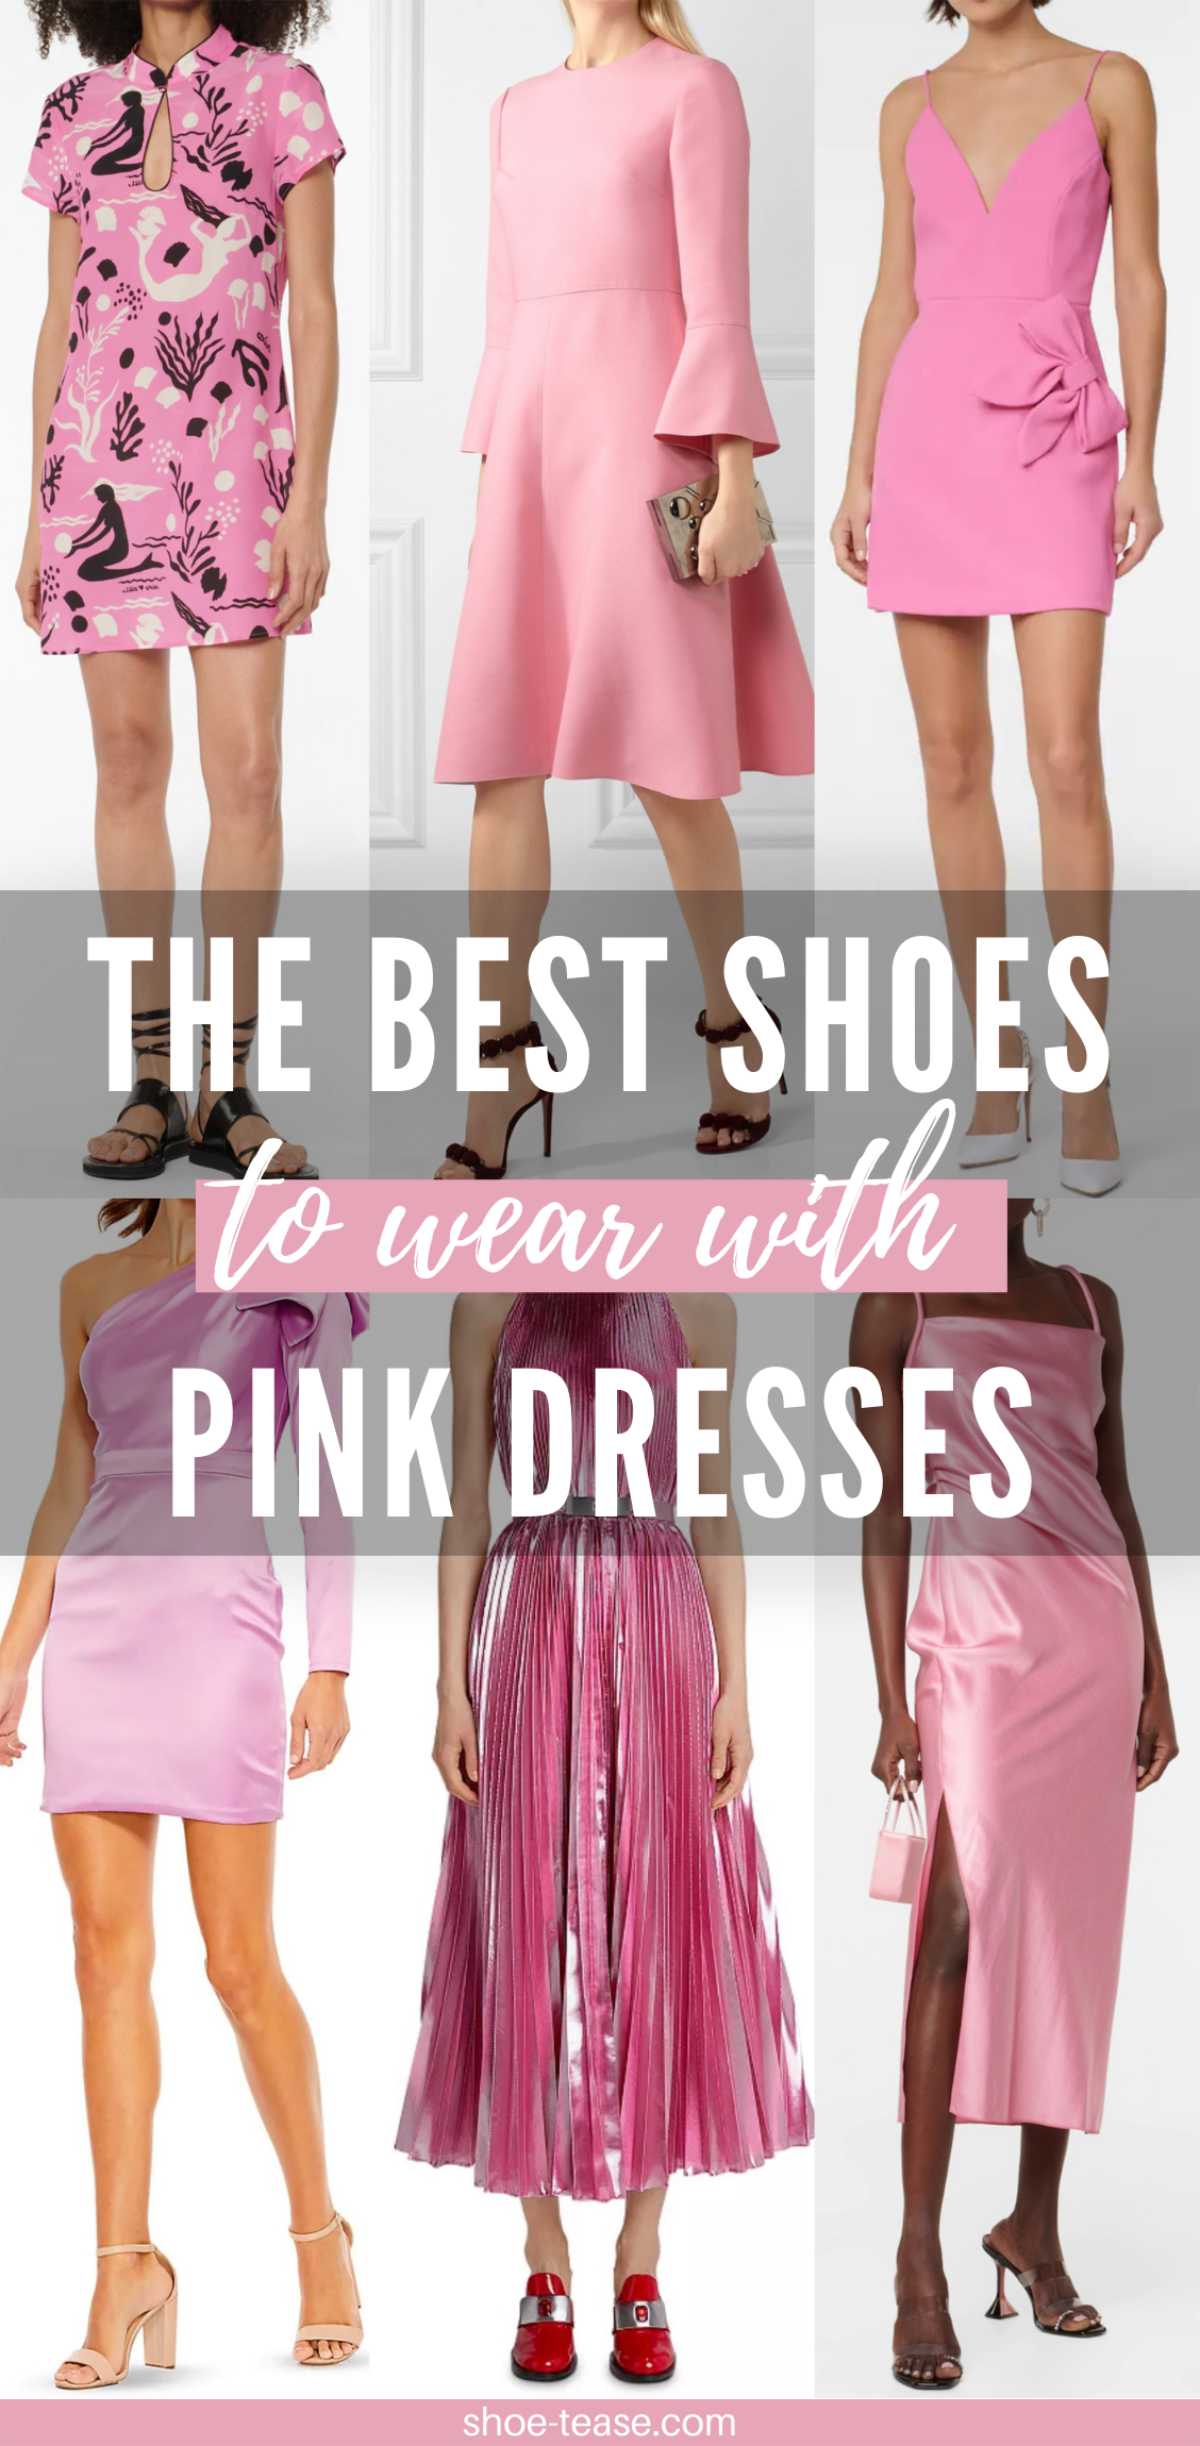 Dakota Johnson Inspired Short Pink Chiffon Dress in Movie 